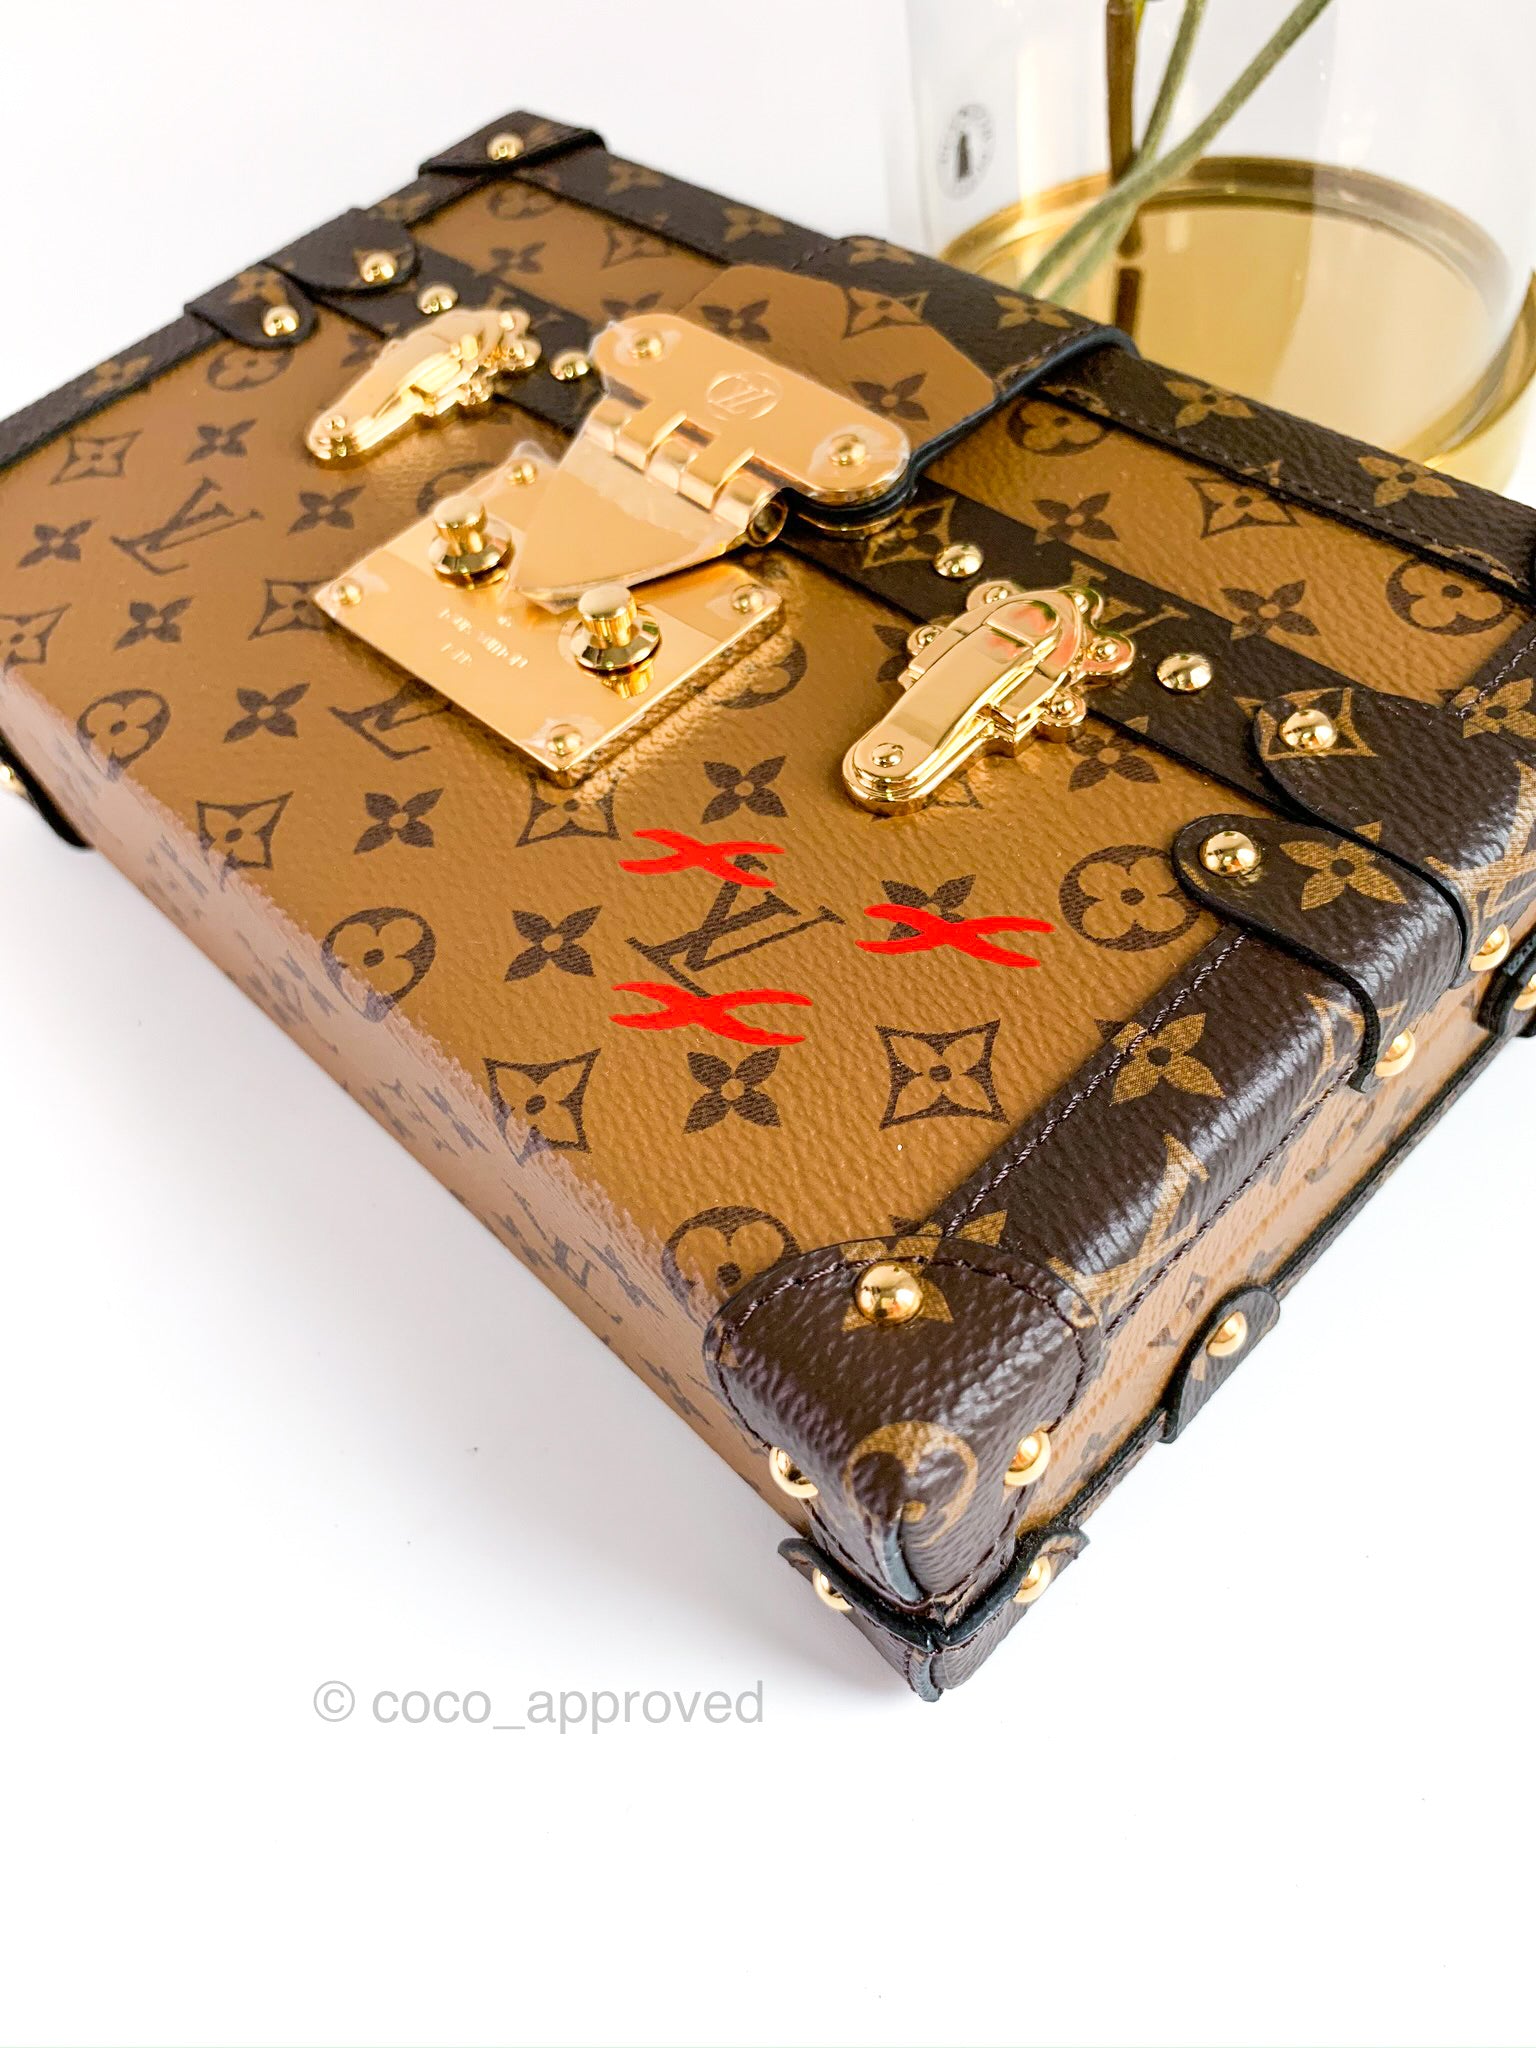 Petite Malle Monogram Reverse Canvas - Handbags